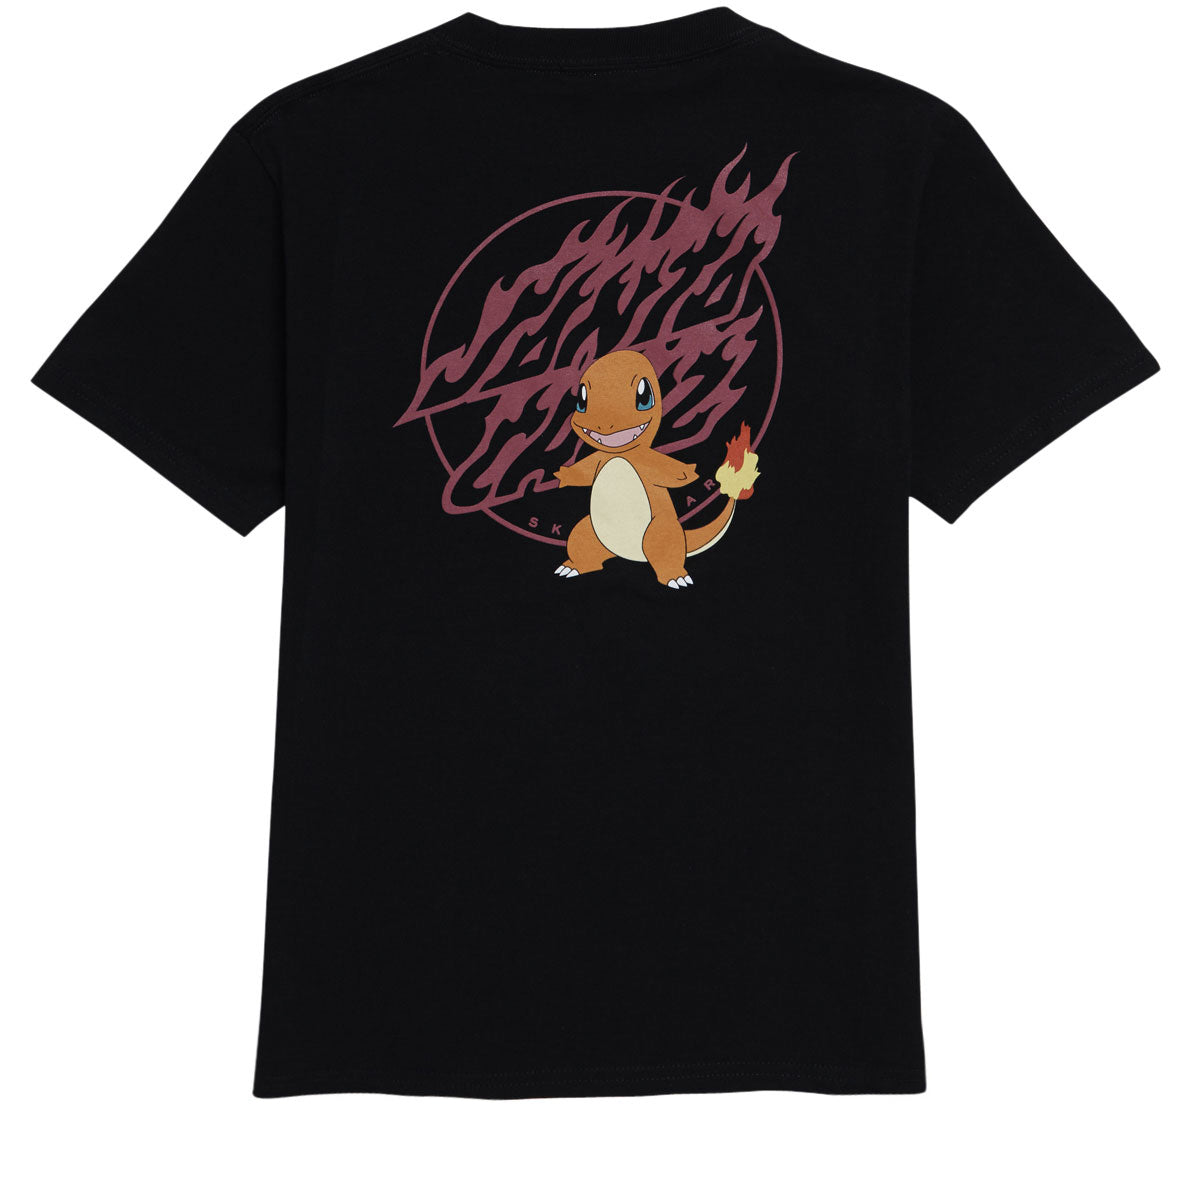 Santa Cruz x Pokemon Youth Fire Type 1 T-Shirt - Black image 1